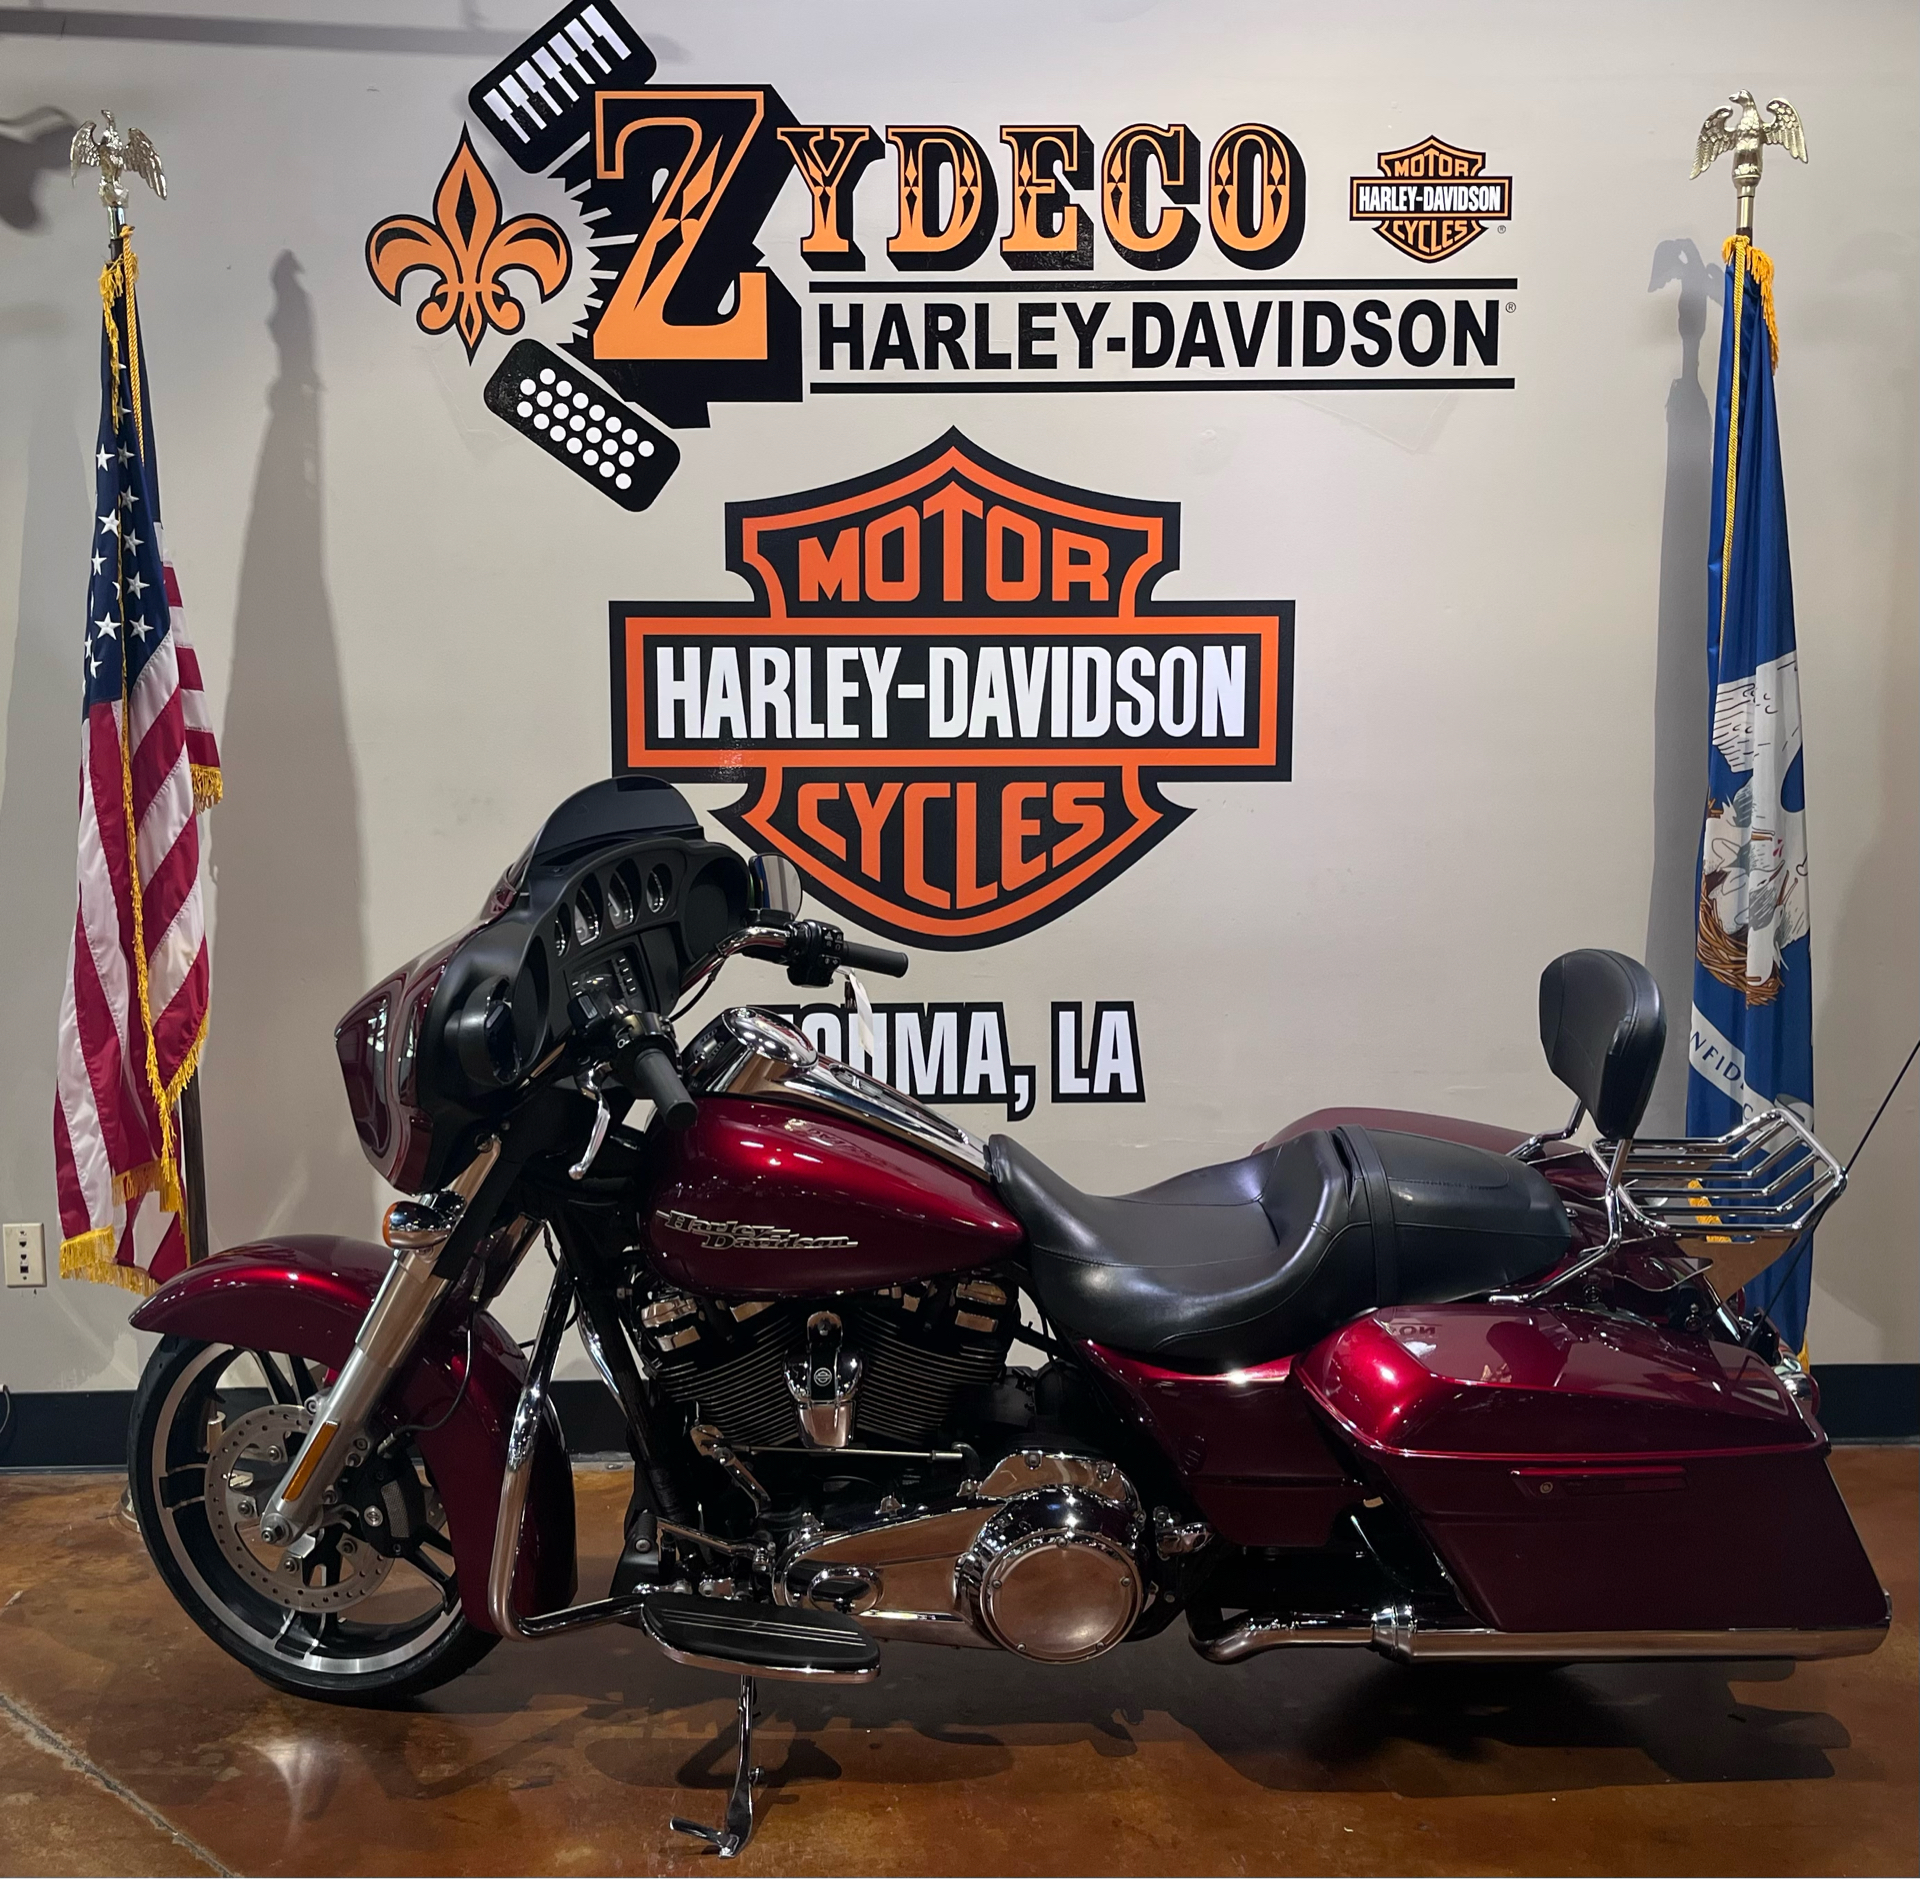 2017 Harley-Davidson Street Glide for sale - Photo 5